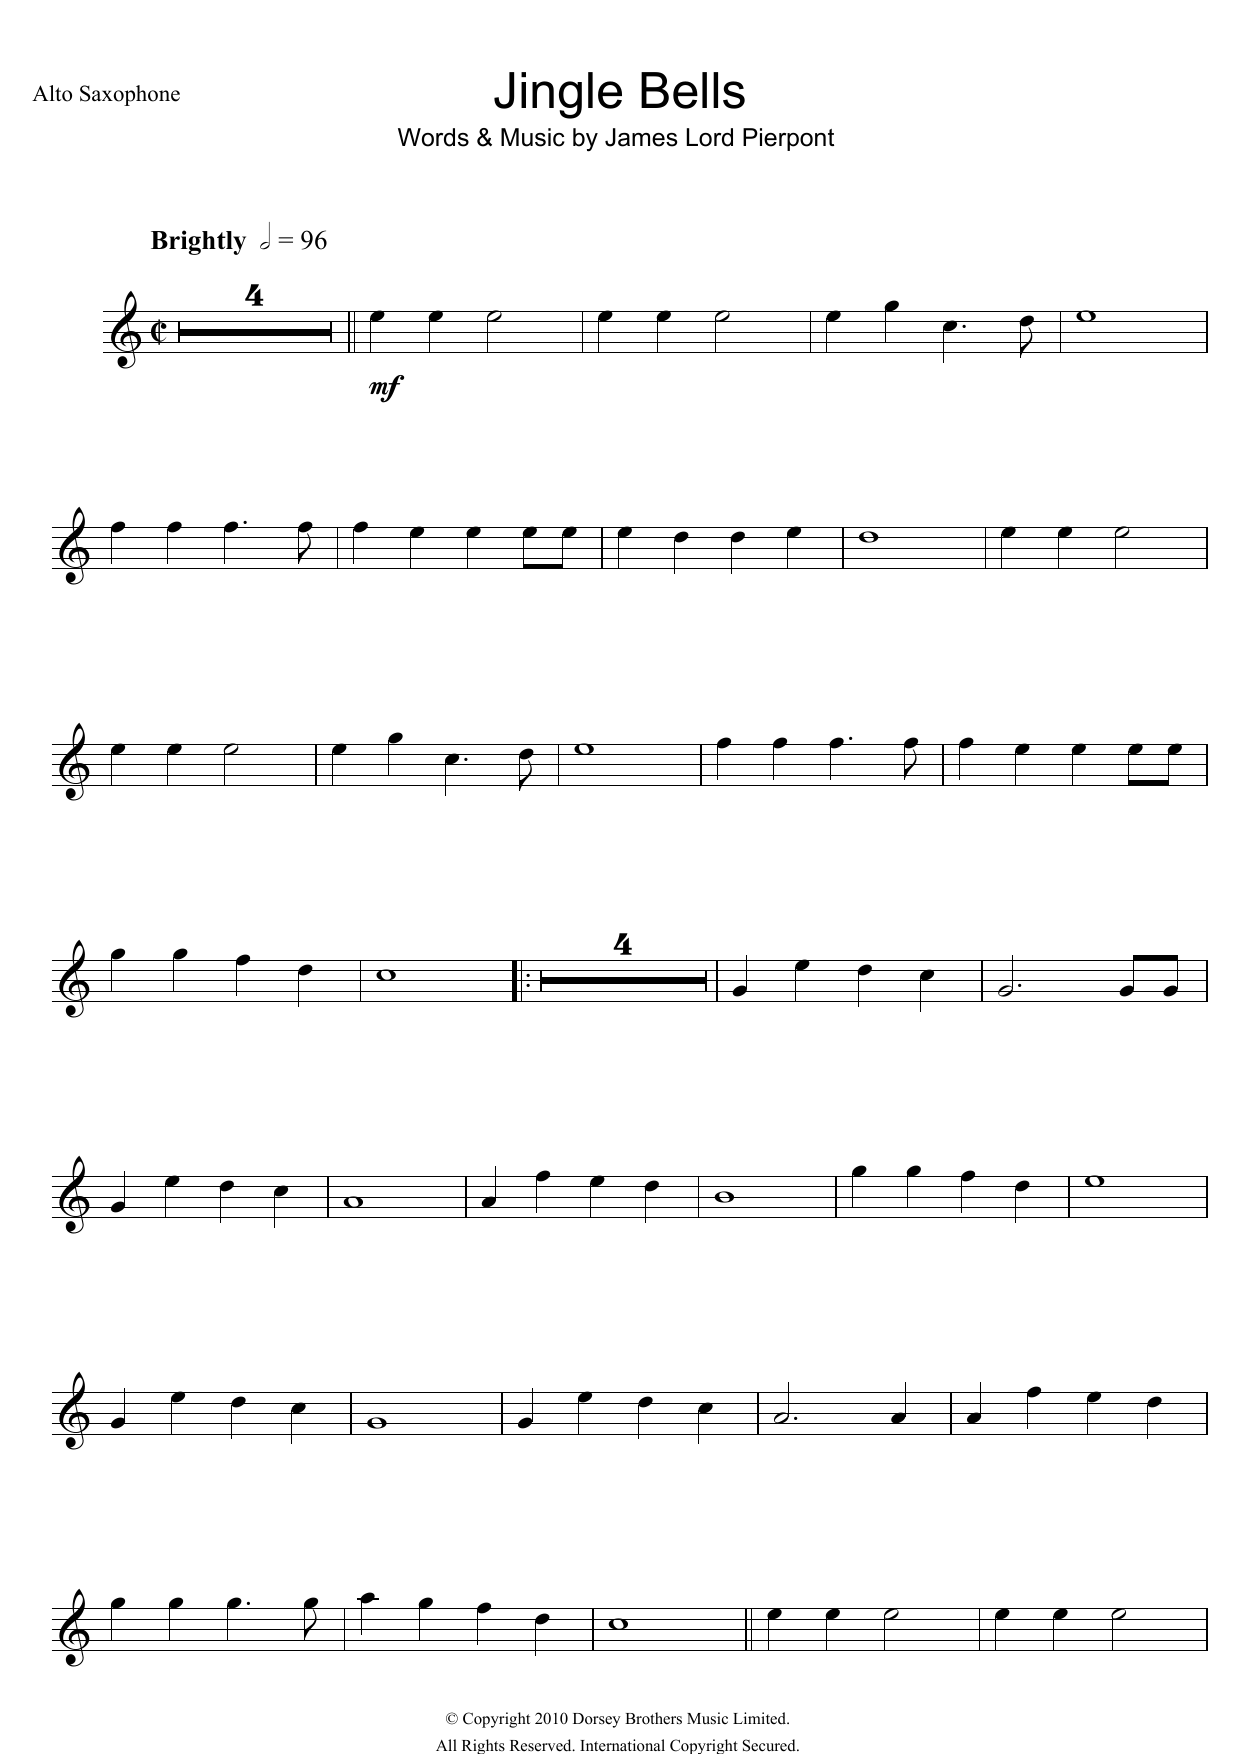 Traditional Carol Jingle Bells Sheet Music Notes & Chords for Violin - Download or Print PDF